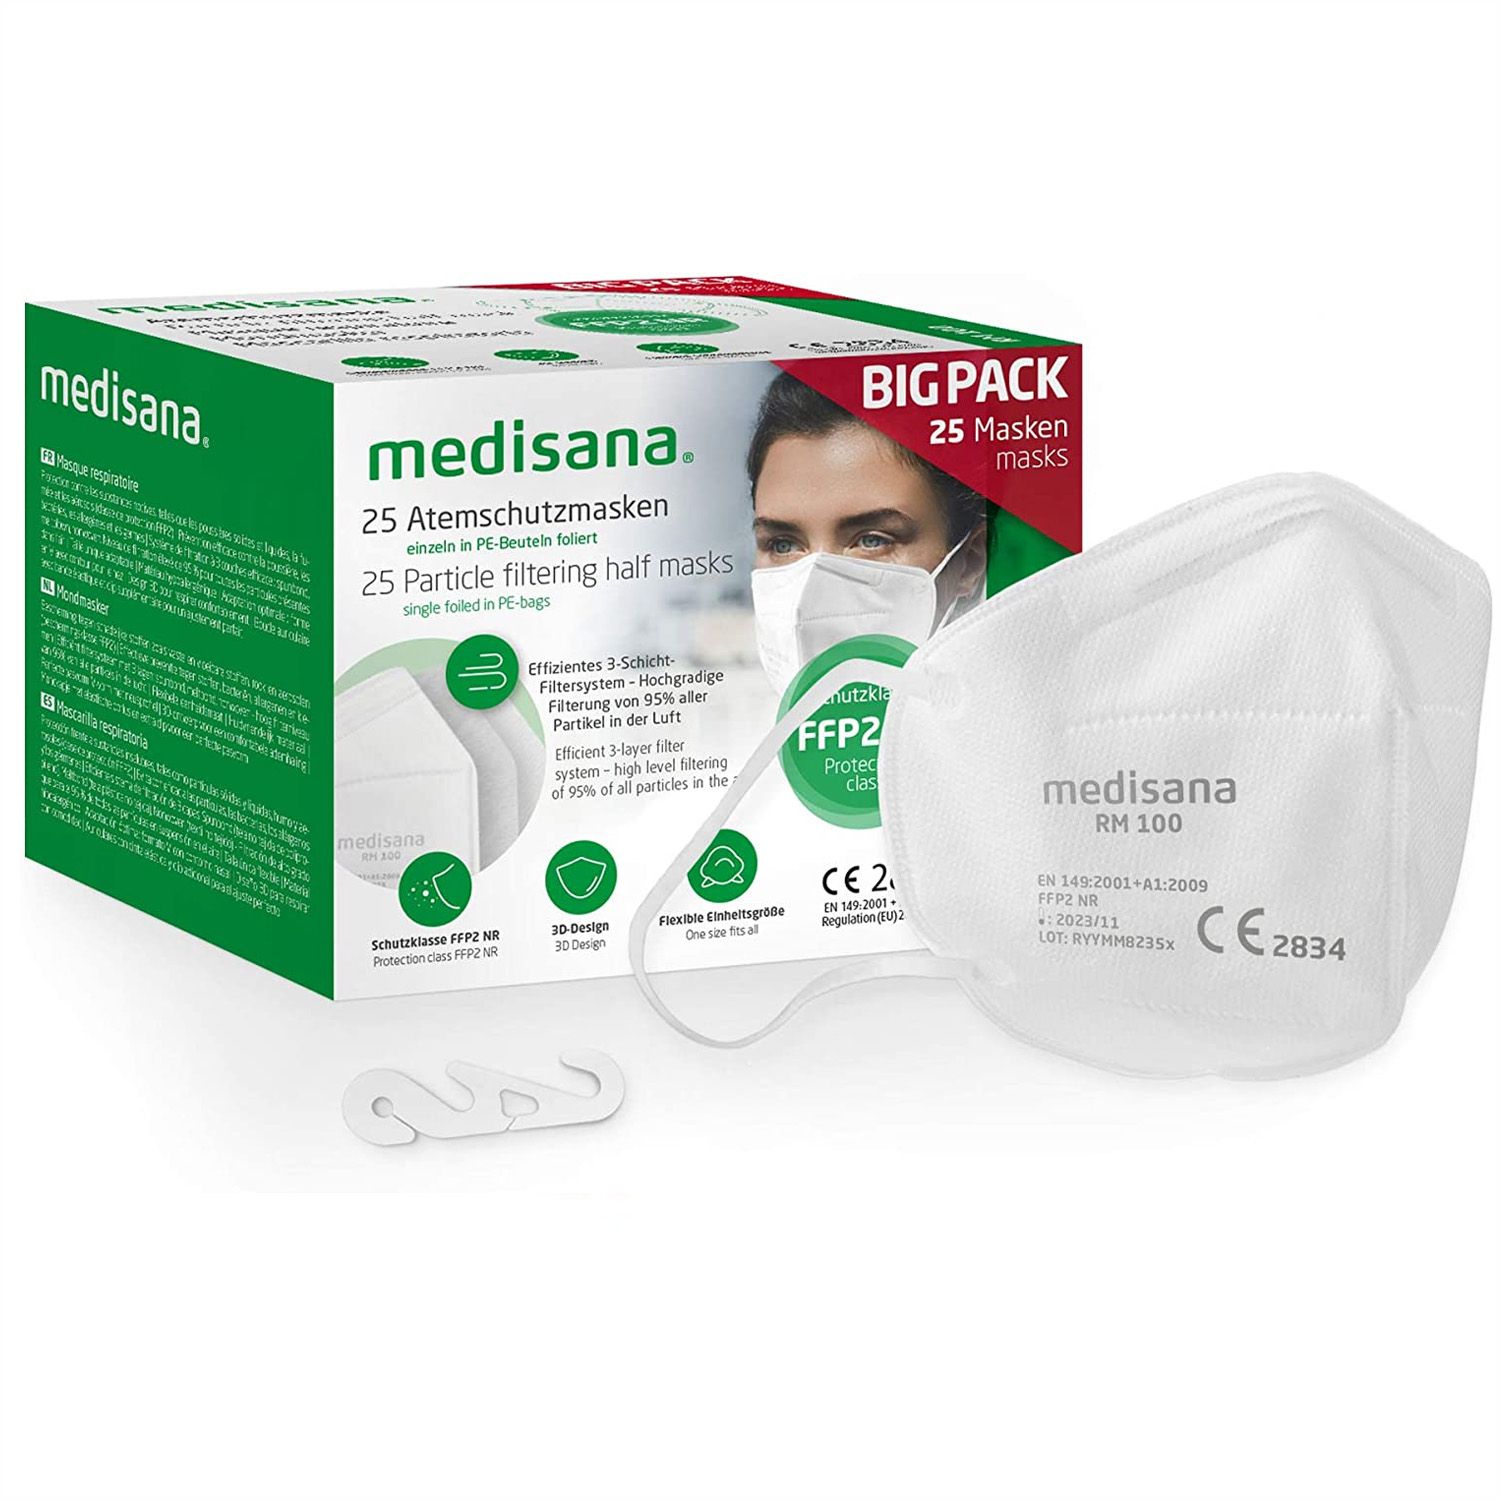 medisana RM 100 Ffp2 Maske – 25 Stück Atemschutzmaske Atemmaske Gesichtsmaske